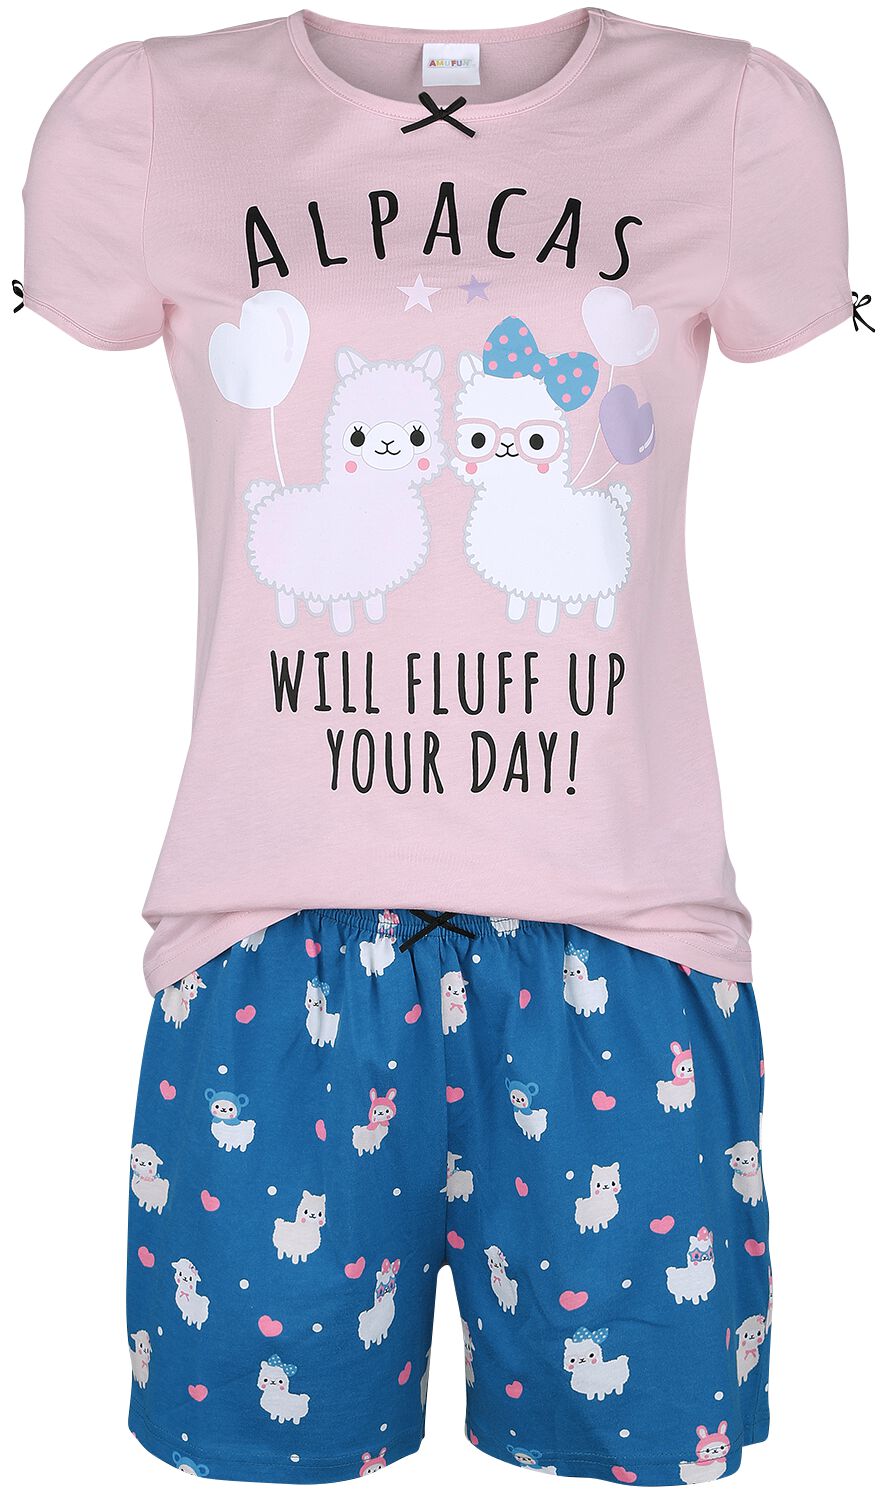 Pyjama de Amufun - Alpacasso - Fluff Up Your Day! - S à XXL - pour Femme - multicolore